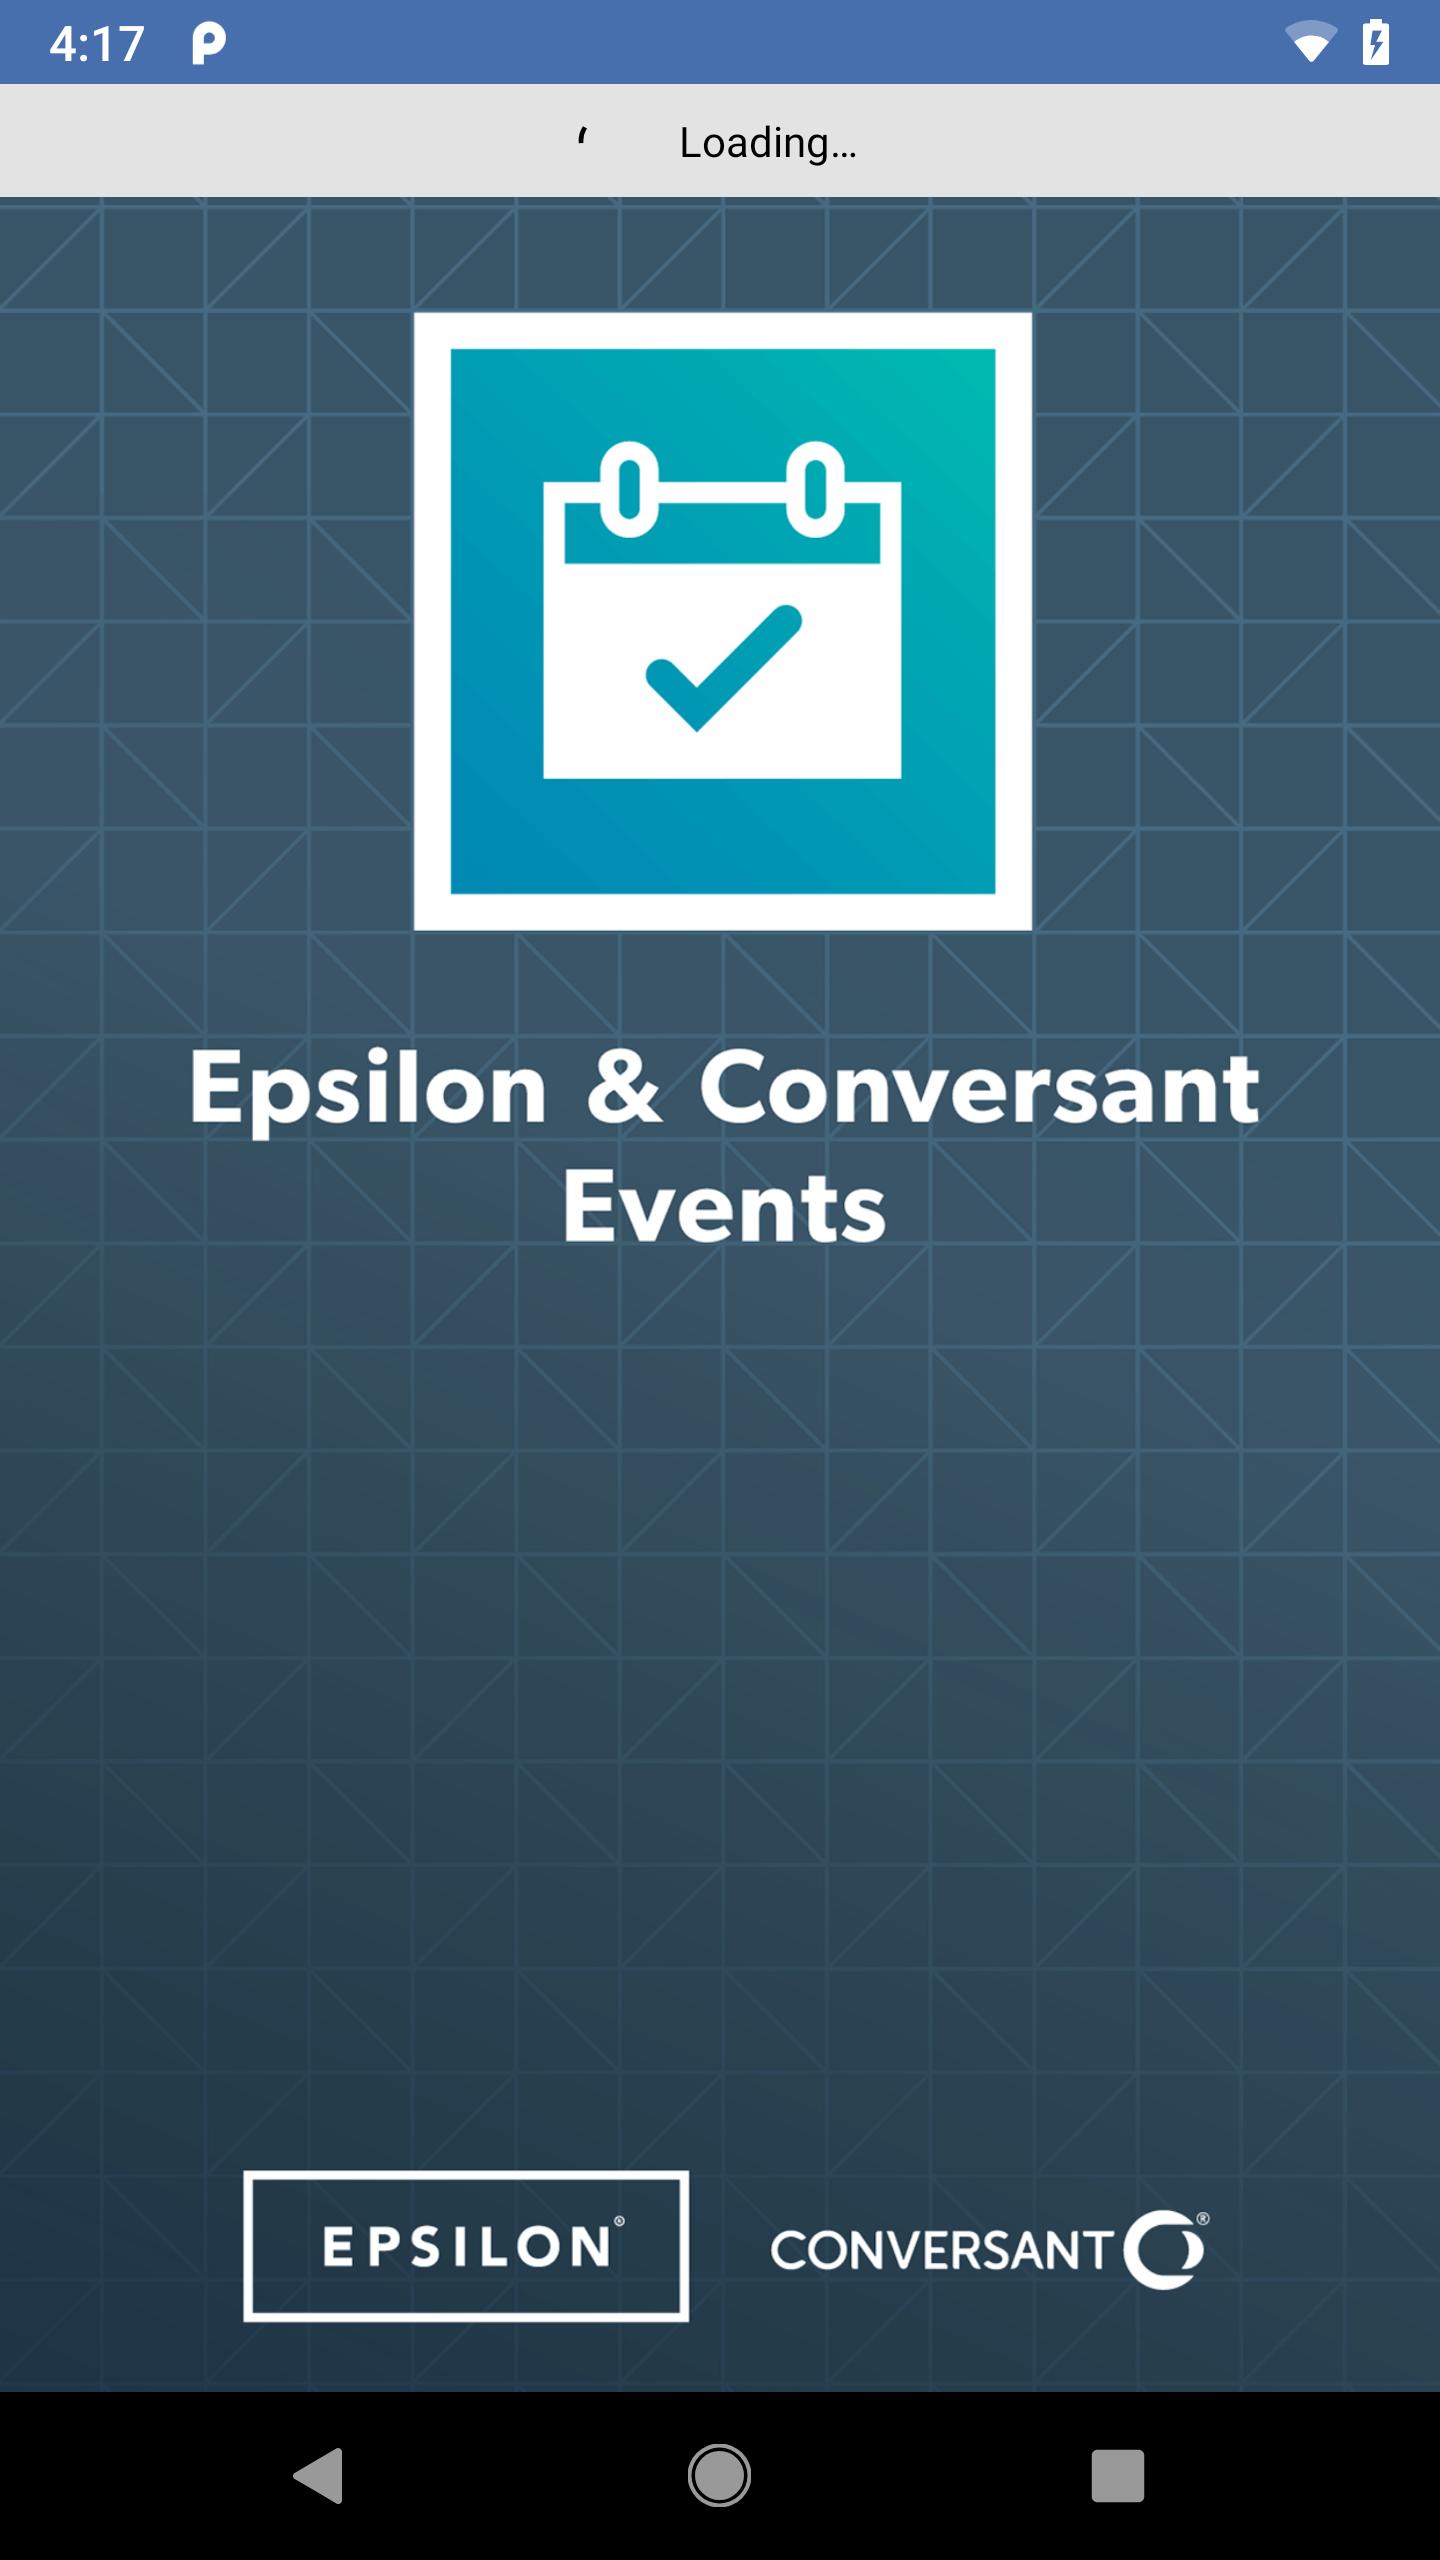 Epsilon & Conversant Events for Android - APK Download